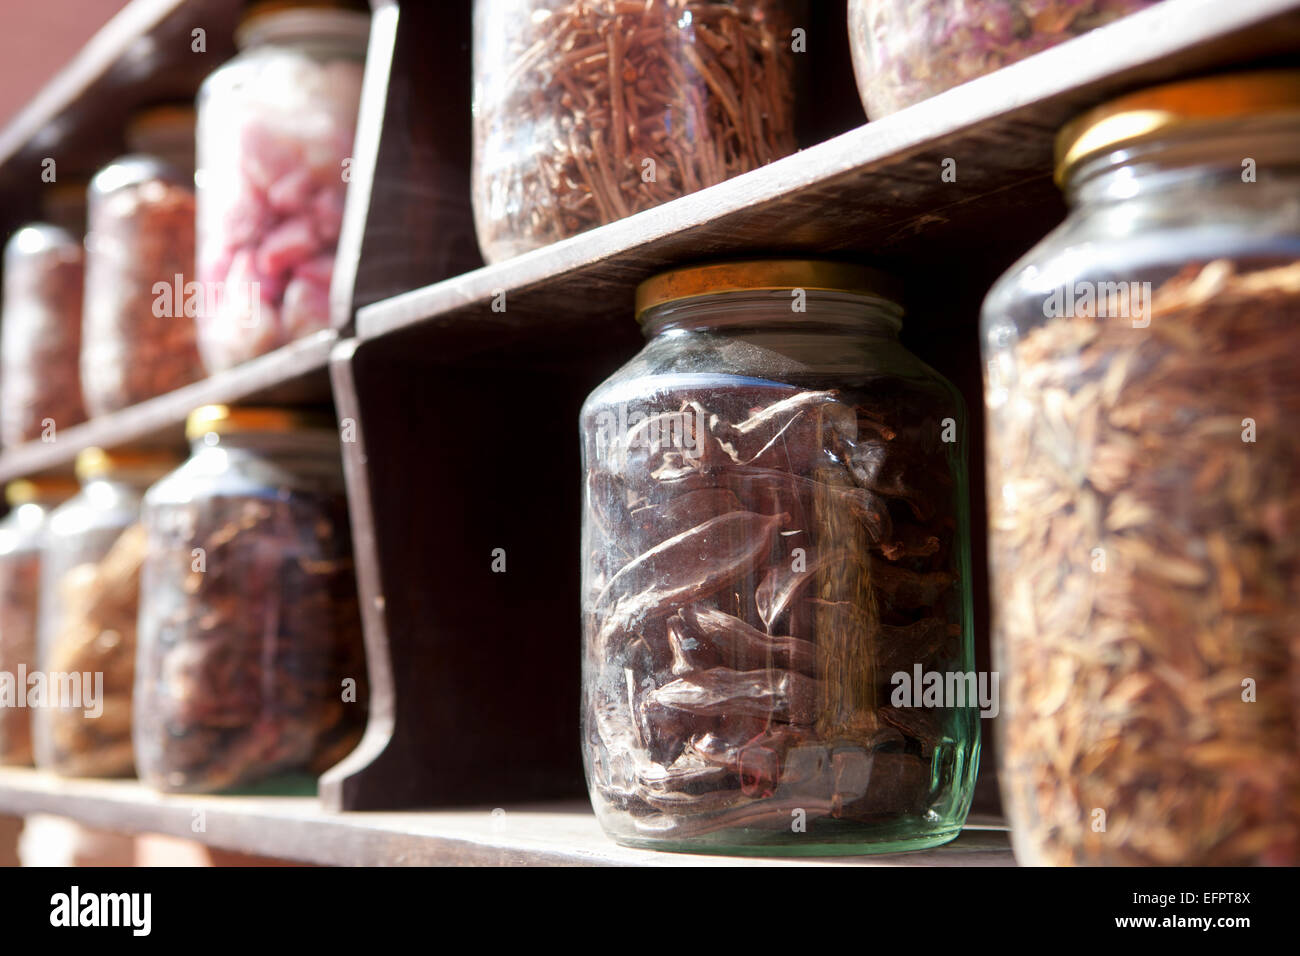 Lignes d'Herb and Spice jars on market stall, Marrakech, Maroc Banque D'Images